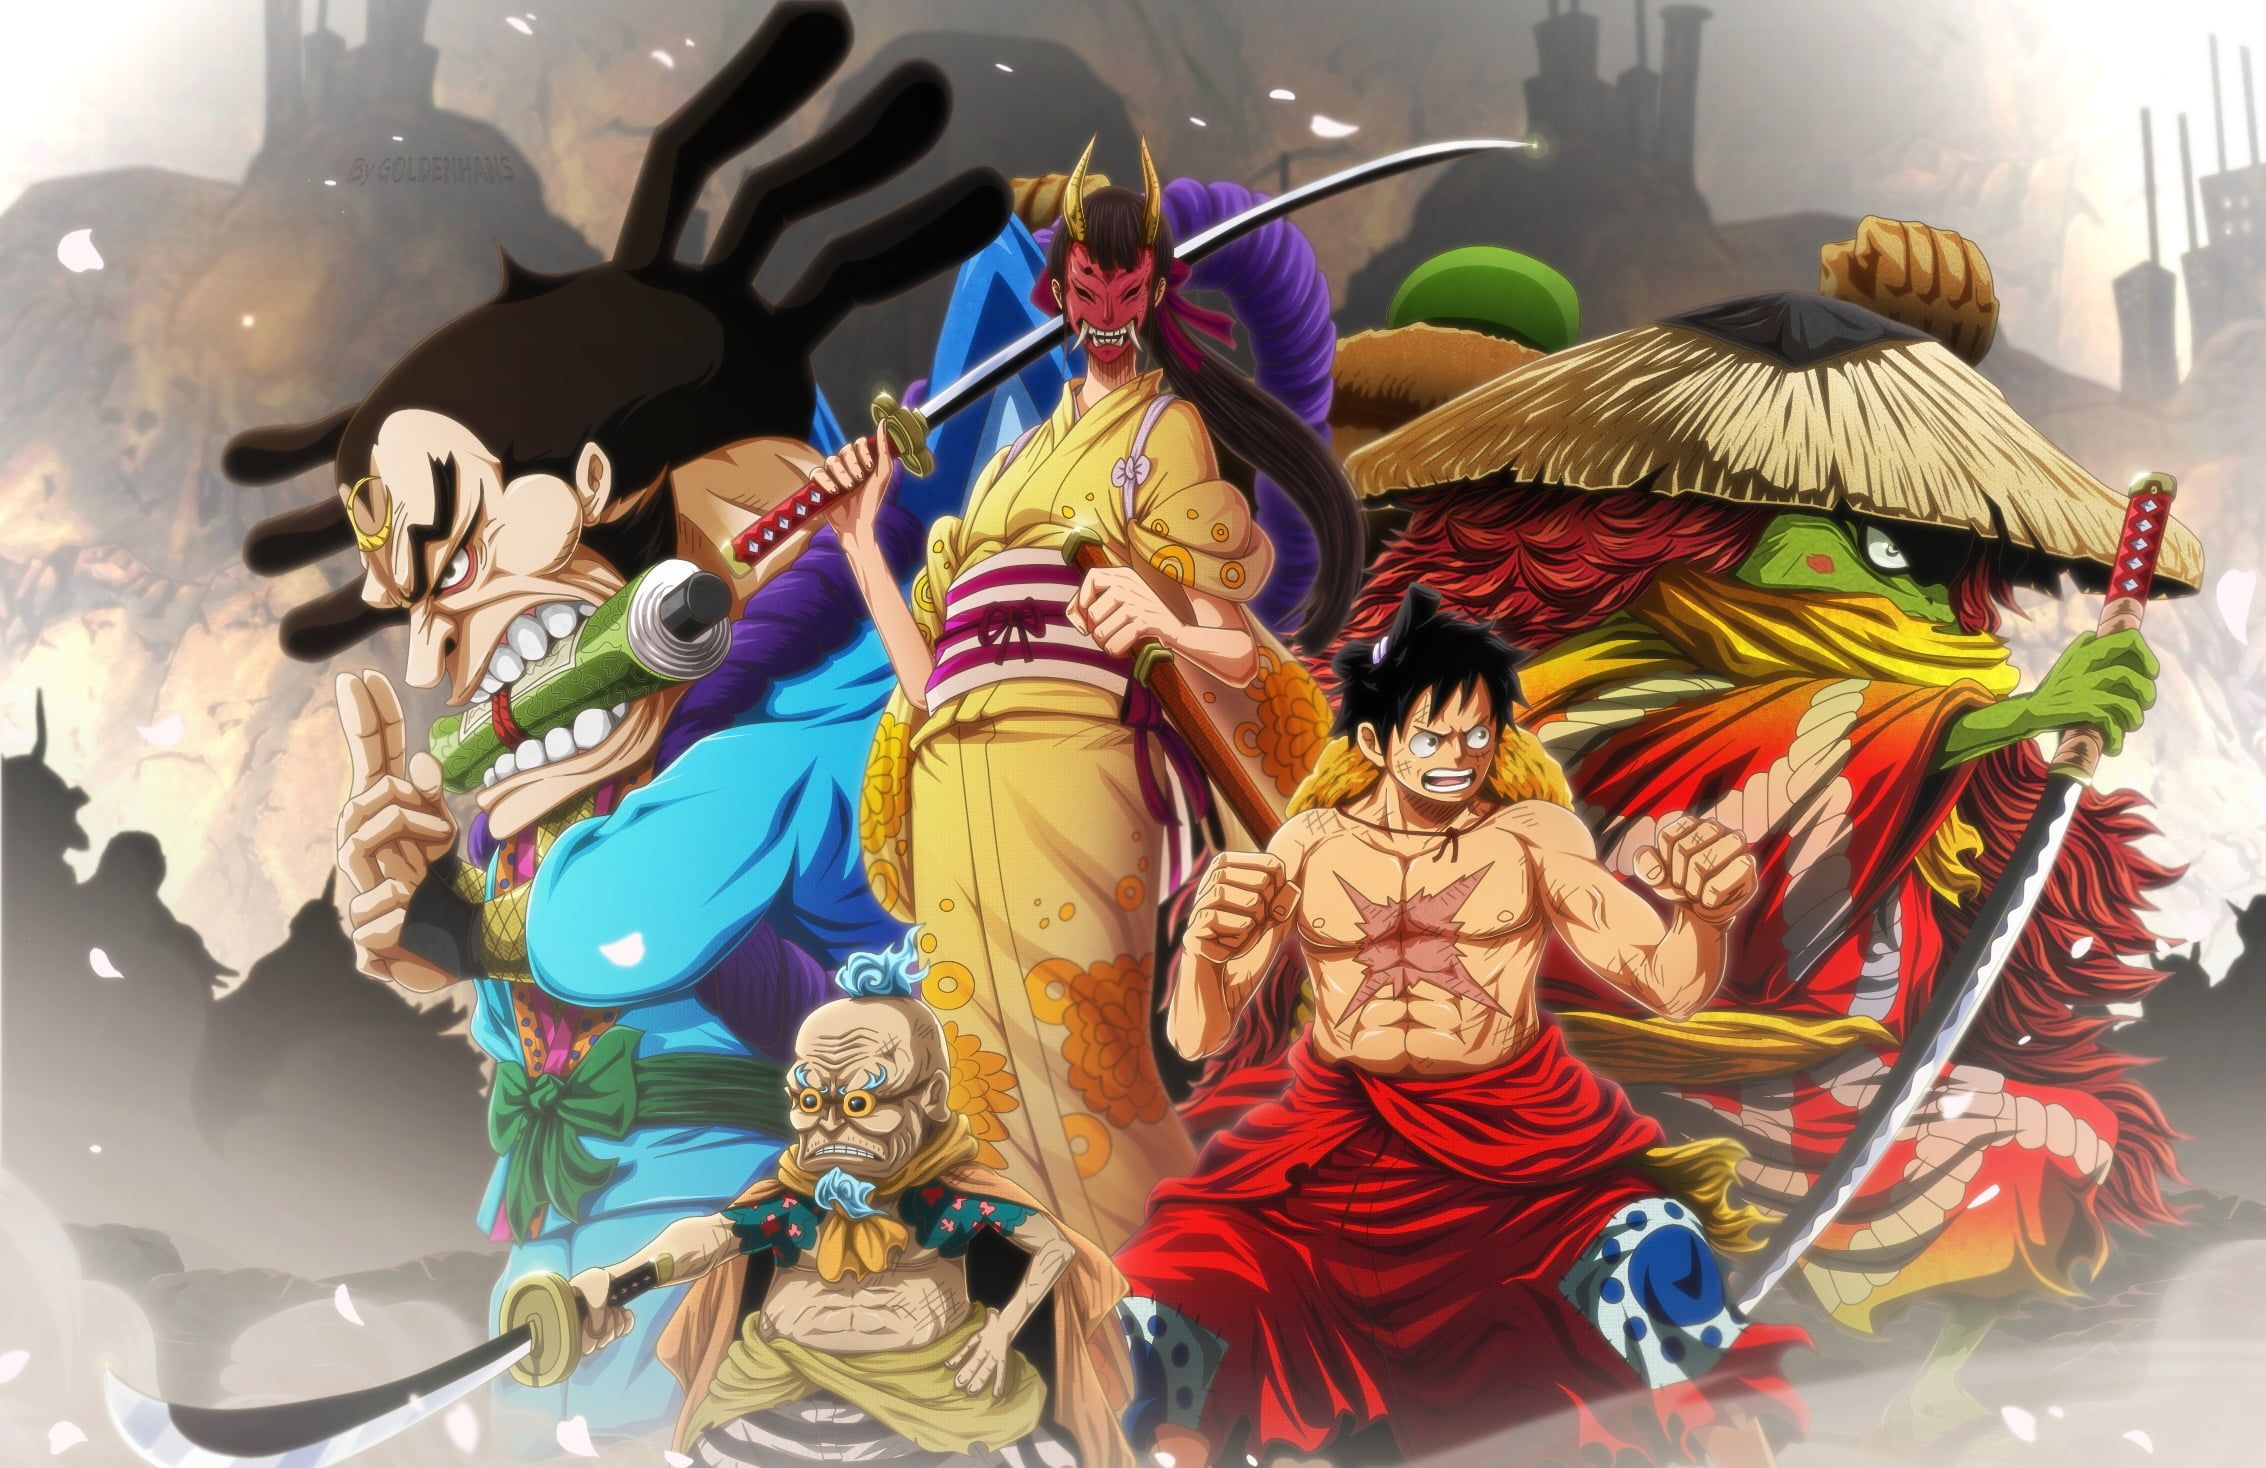 Hyogoro (One Piece) HD wallpaper free download